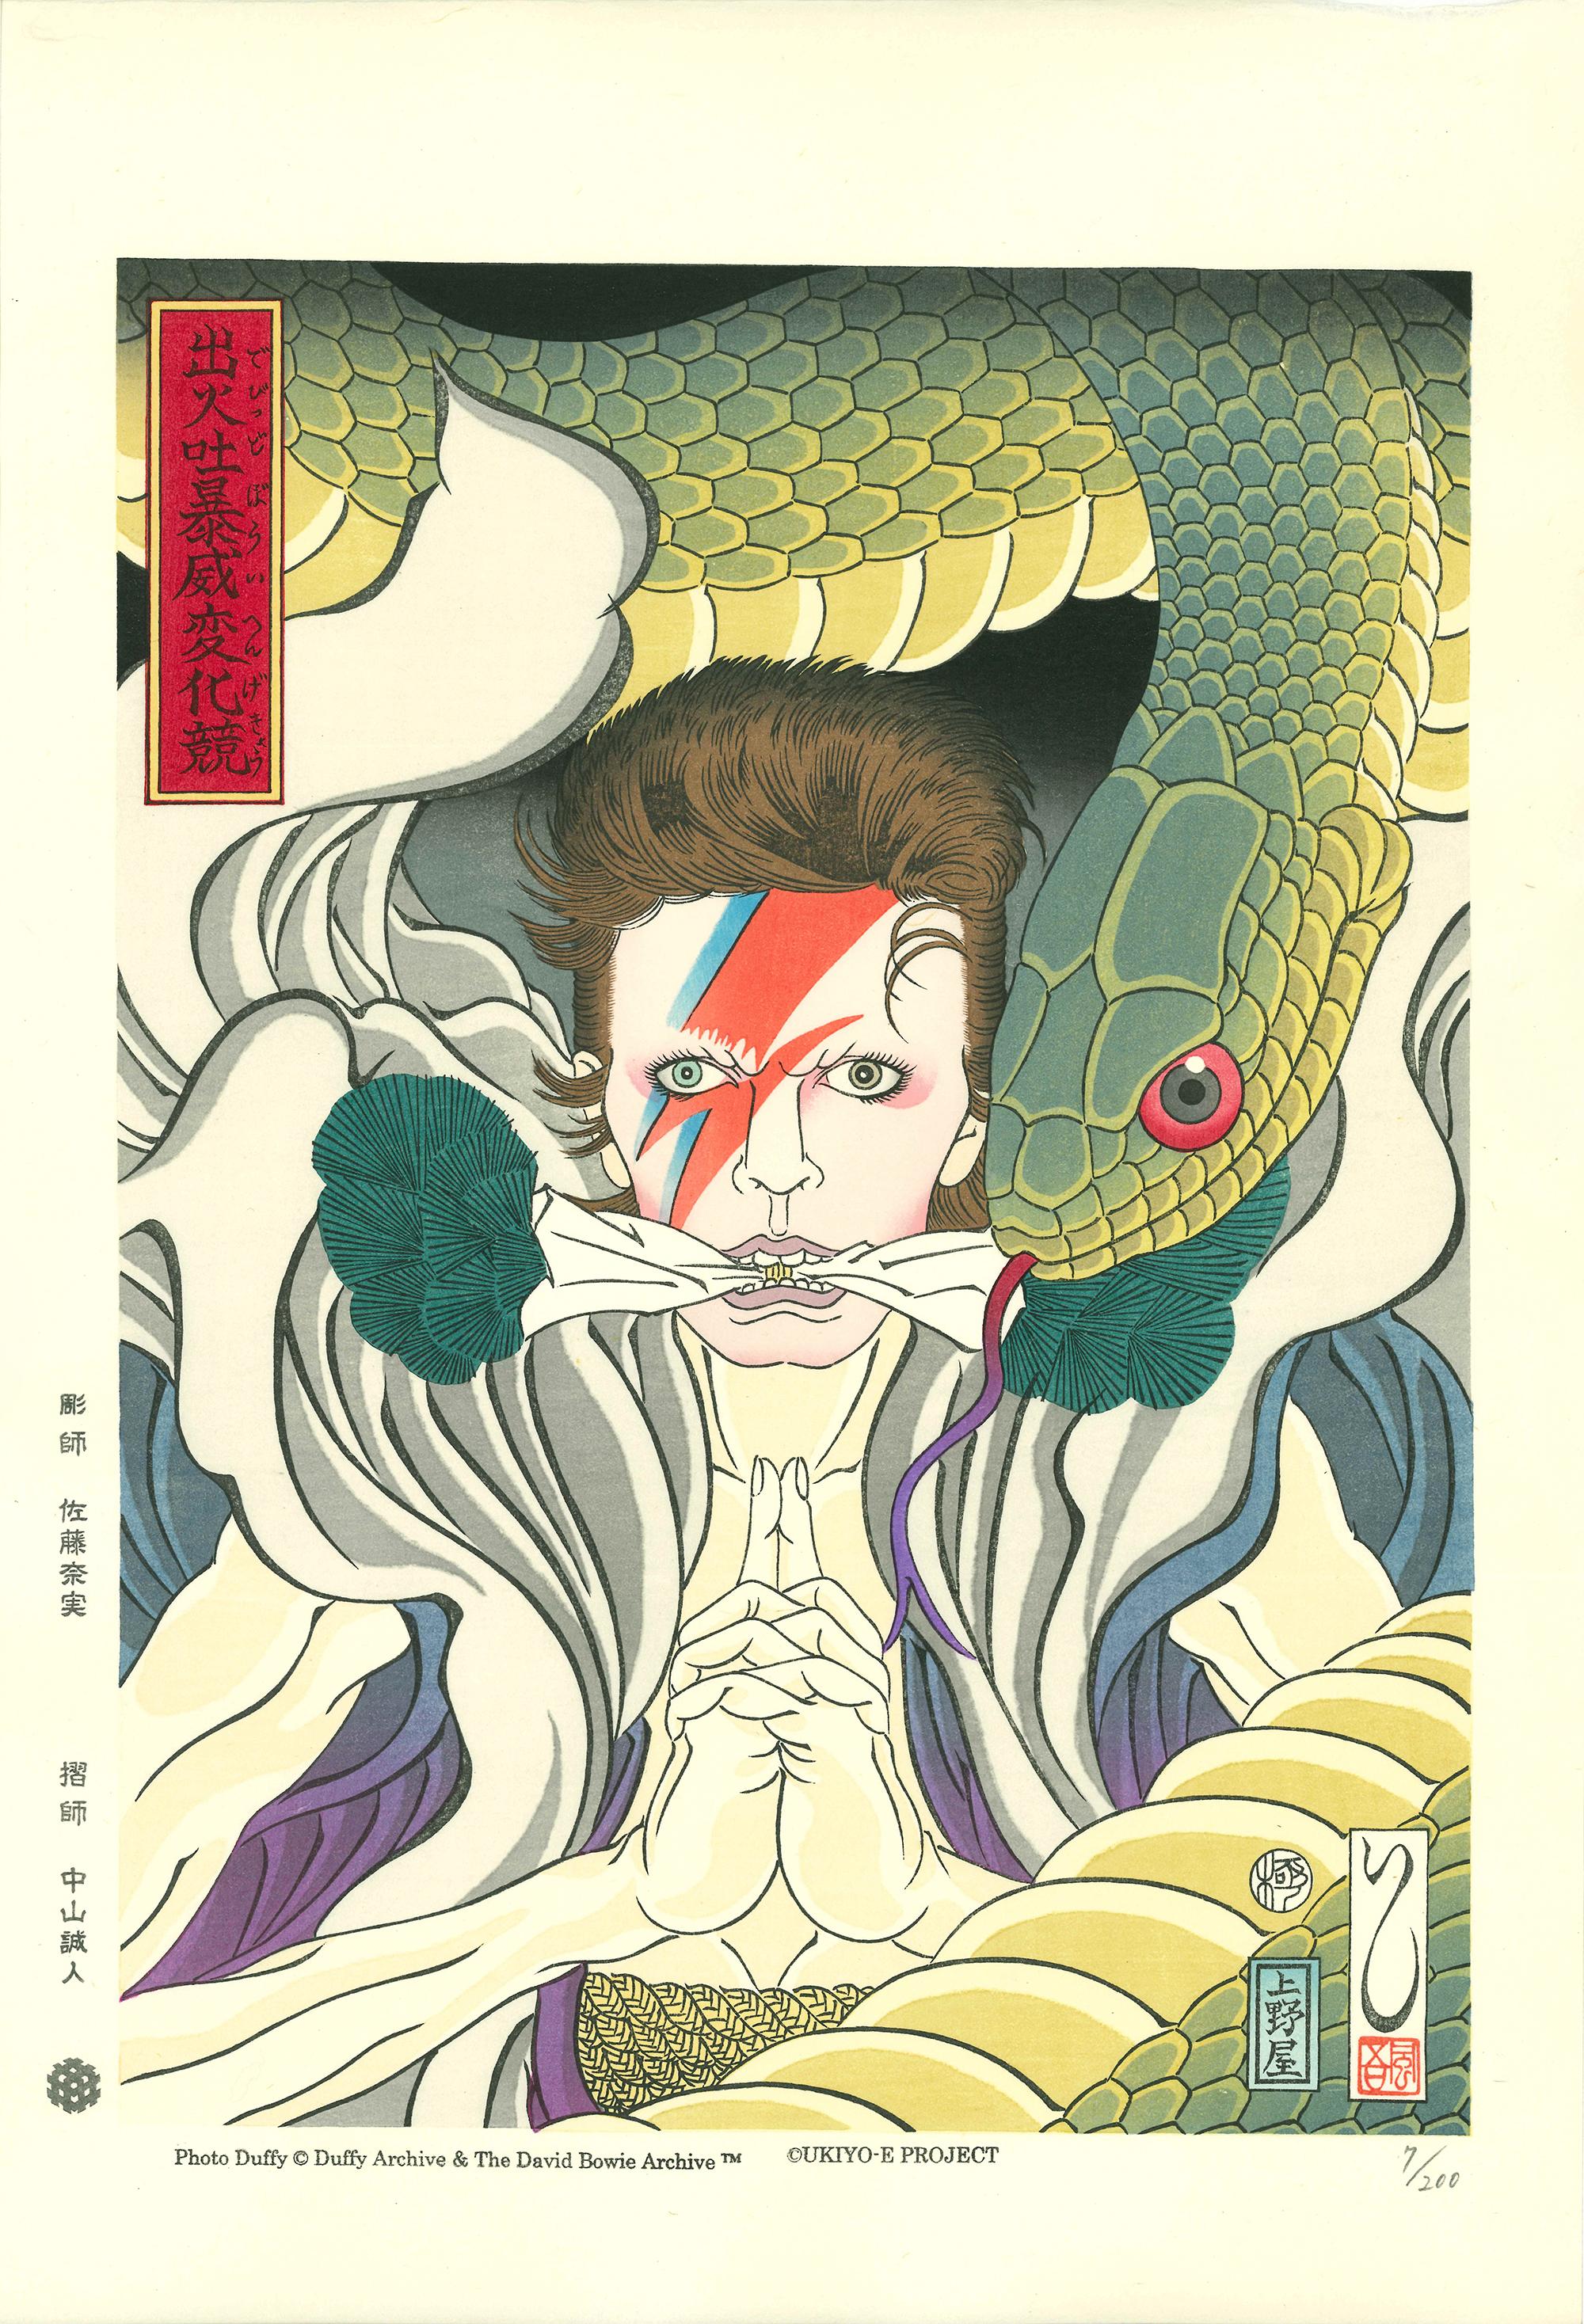 UKIYO-E PROJECT Portrait Print - Kidomaru (Aladdin Sane)